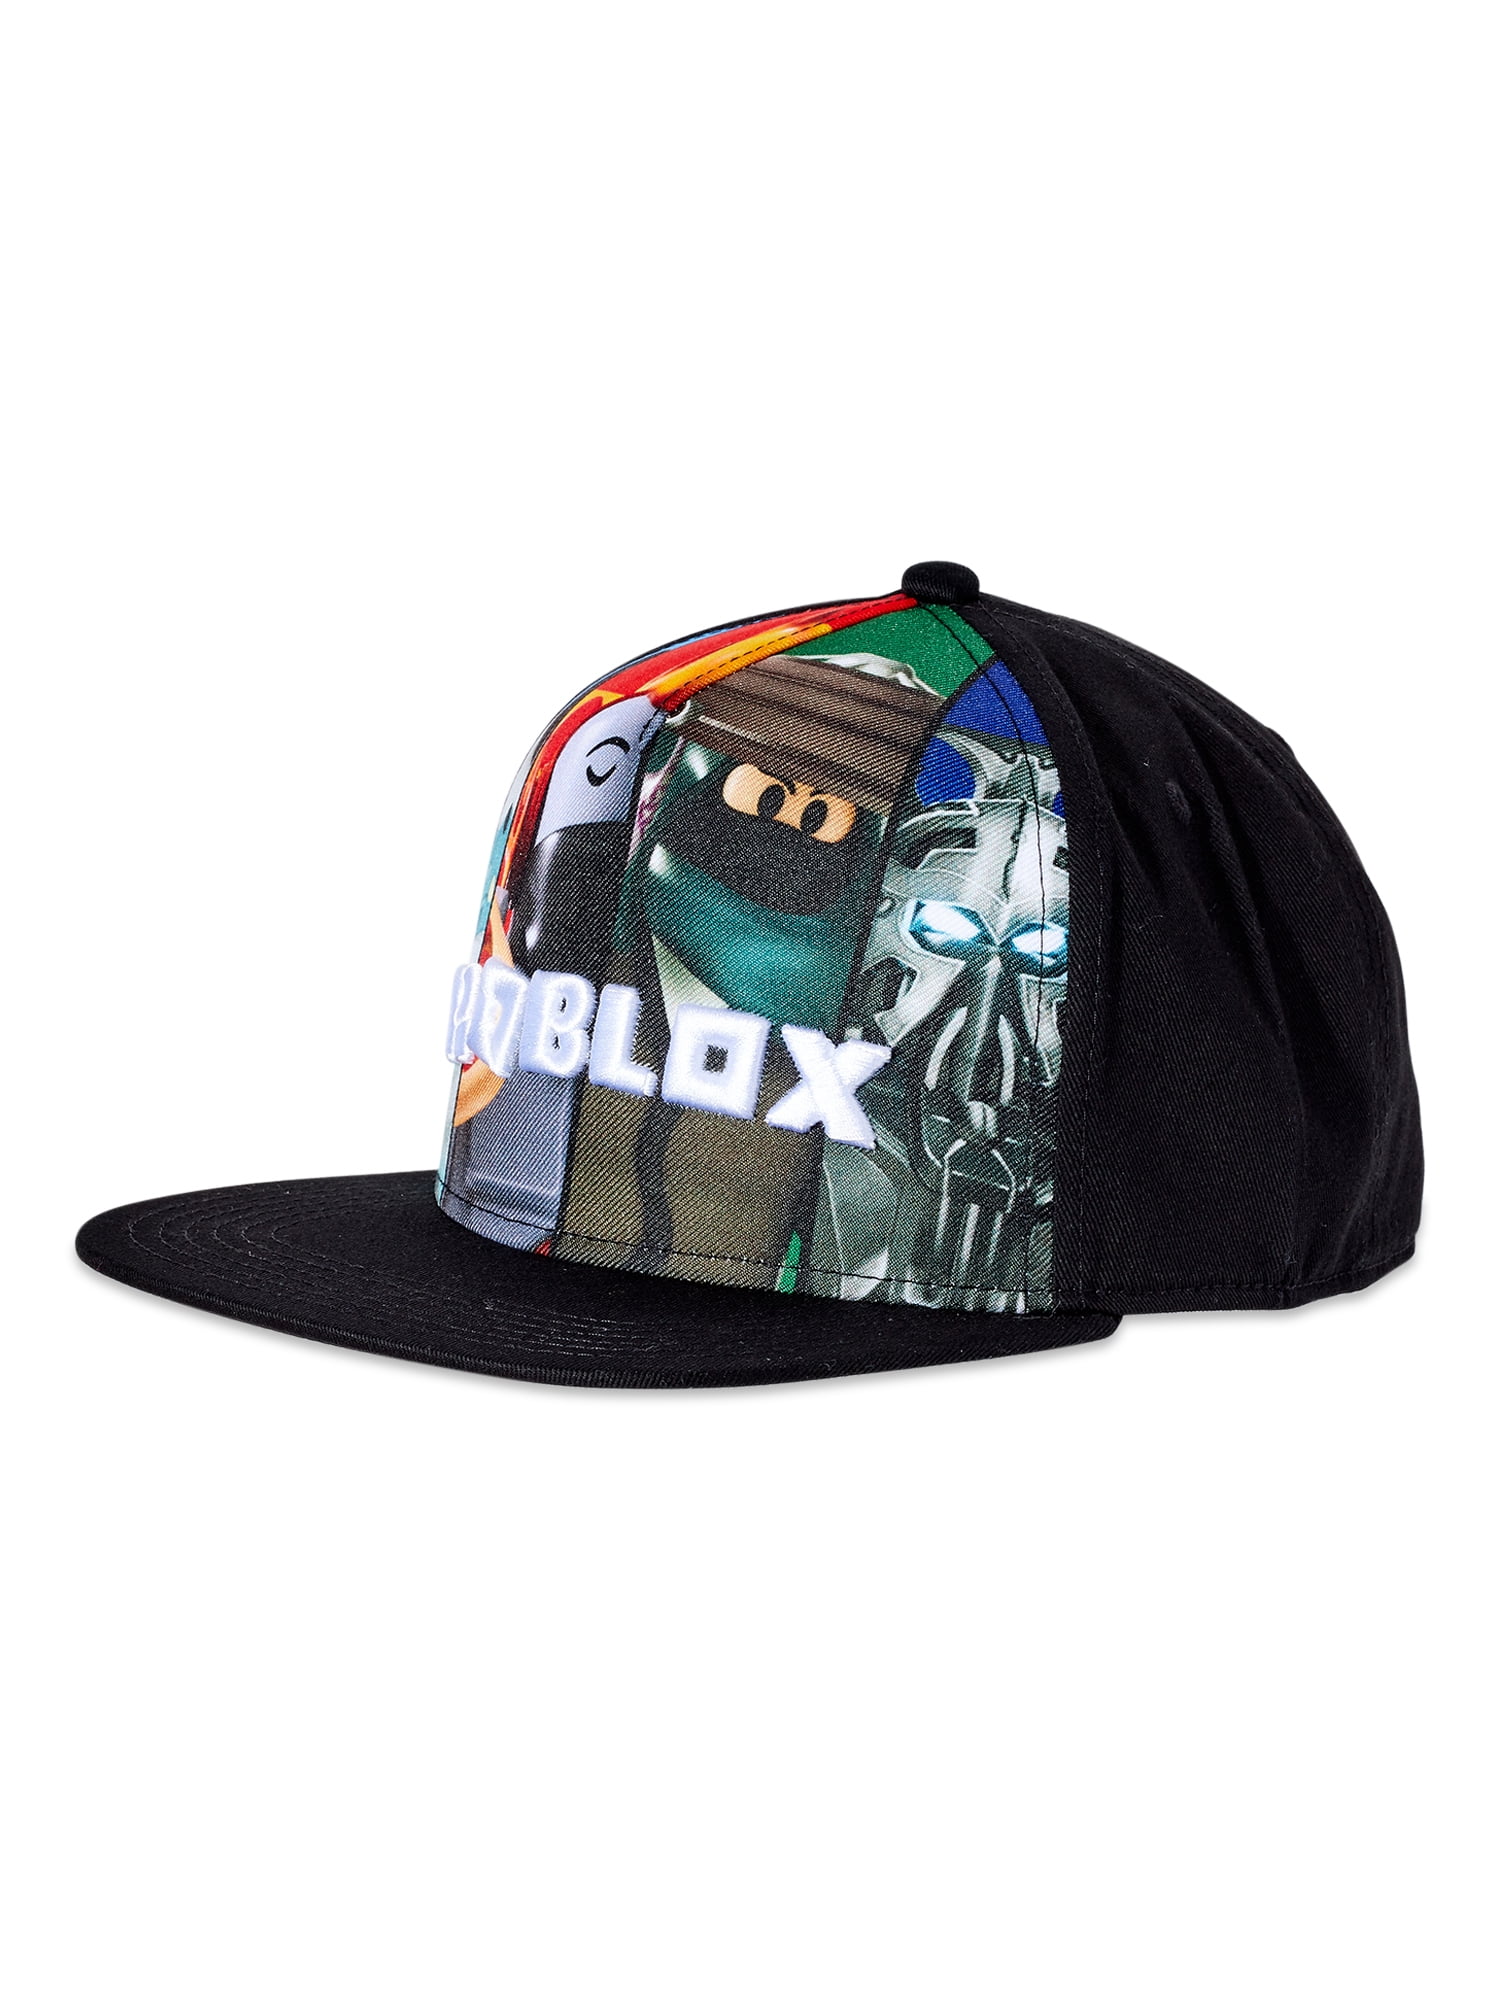 Roblox Boys Baseball Cap Walmart Com Walmart Com - how to see favorite hats in roblox